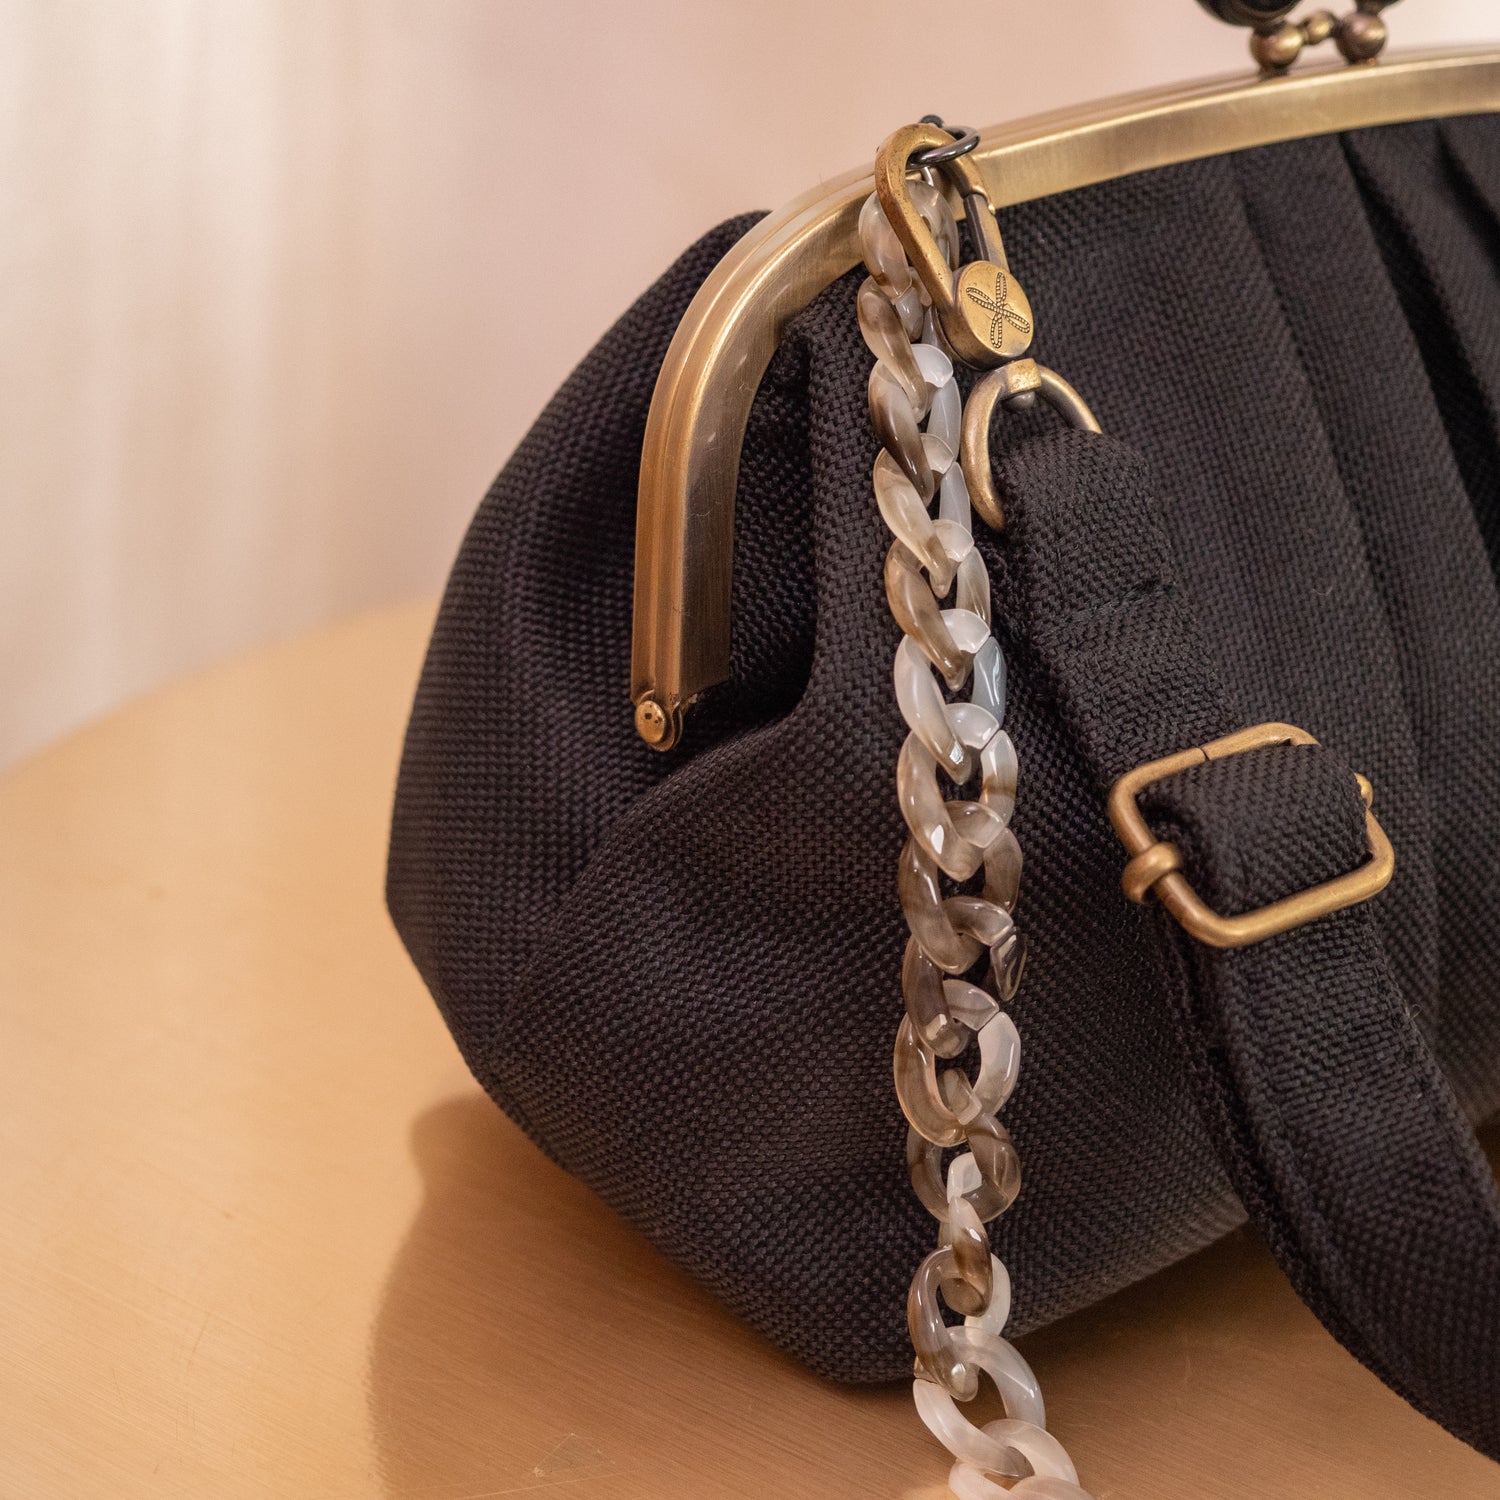 Coach Leather Black New York Quilted Handbag 1857 w Brown Cloth Bag | eBay